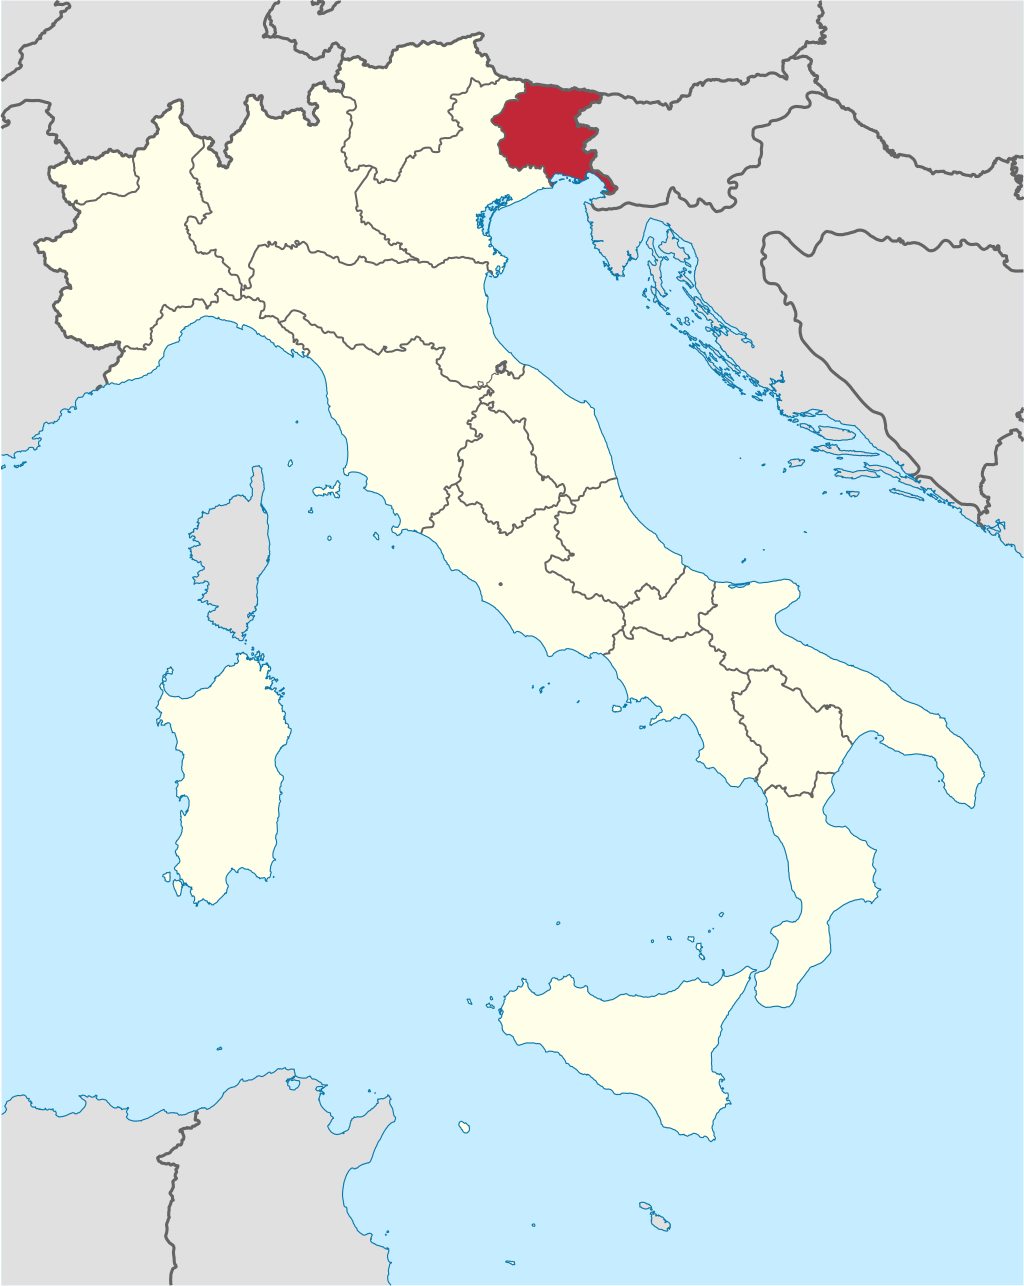 House Ikonik Urbex location or around the region Friuli-Venezia Giulia (Province of Udine), Italy